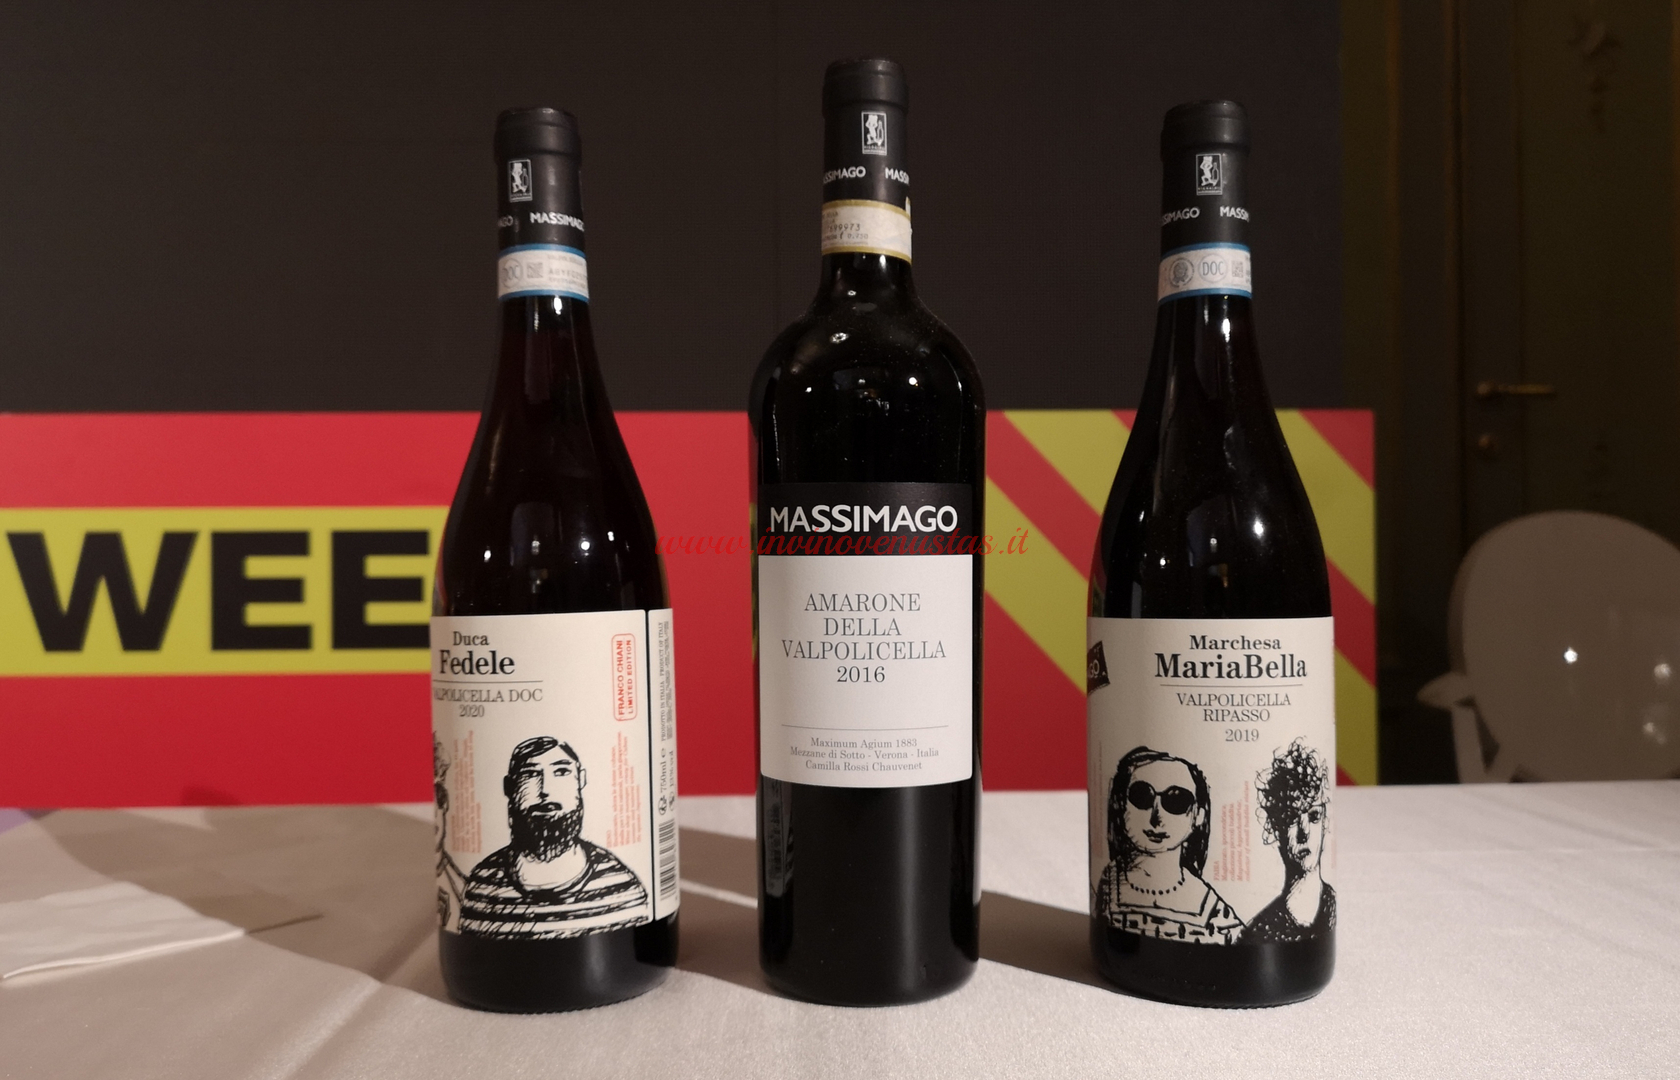 Vini in degustazione masterclass introduttiva WSET Milano Wine Week 2021